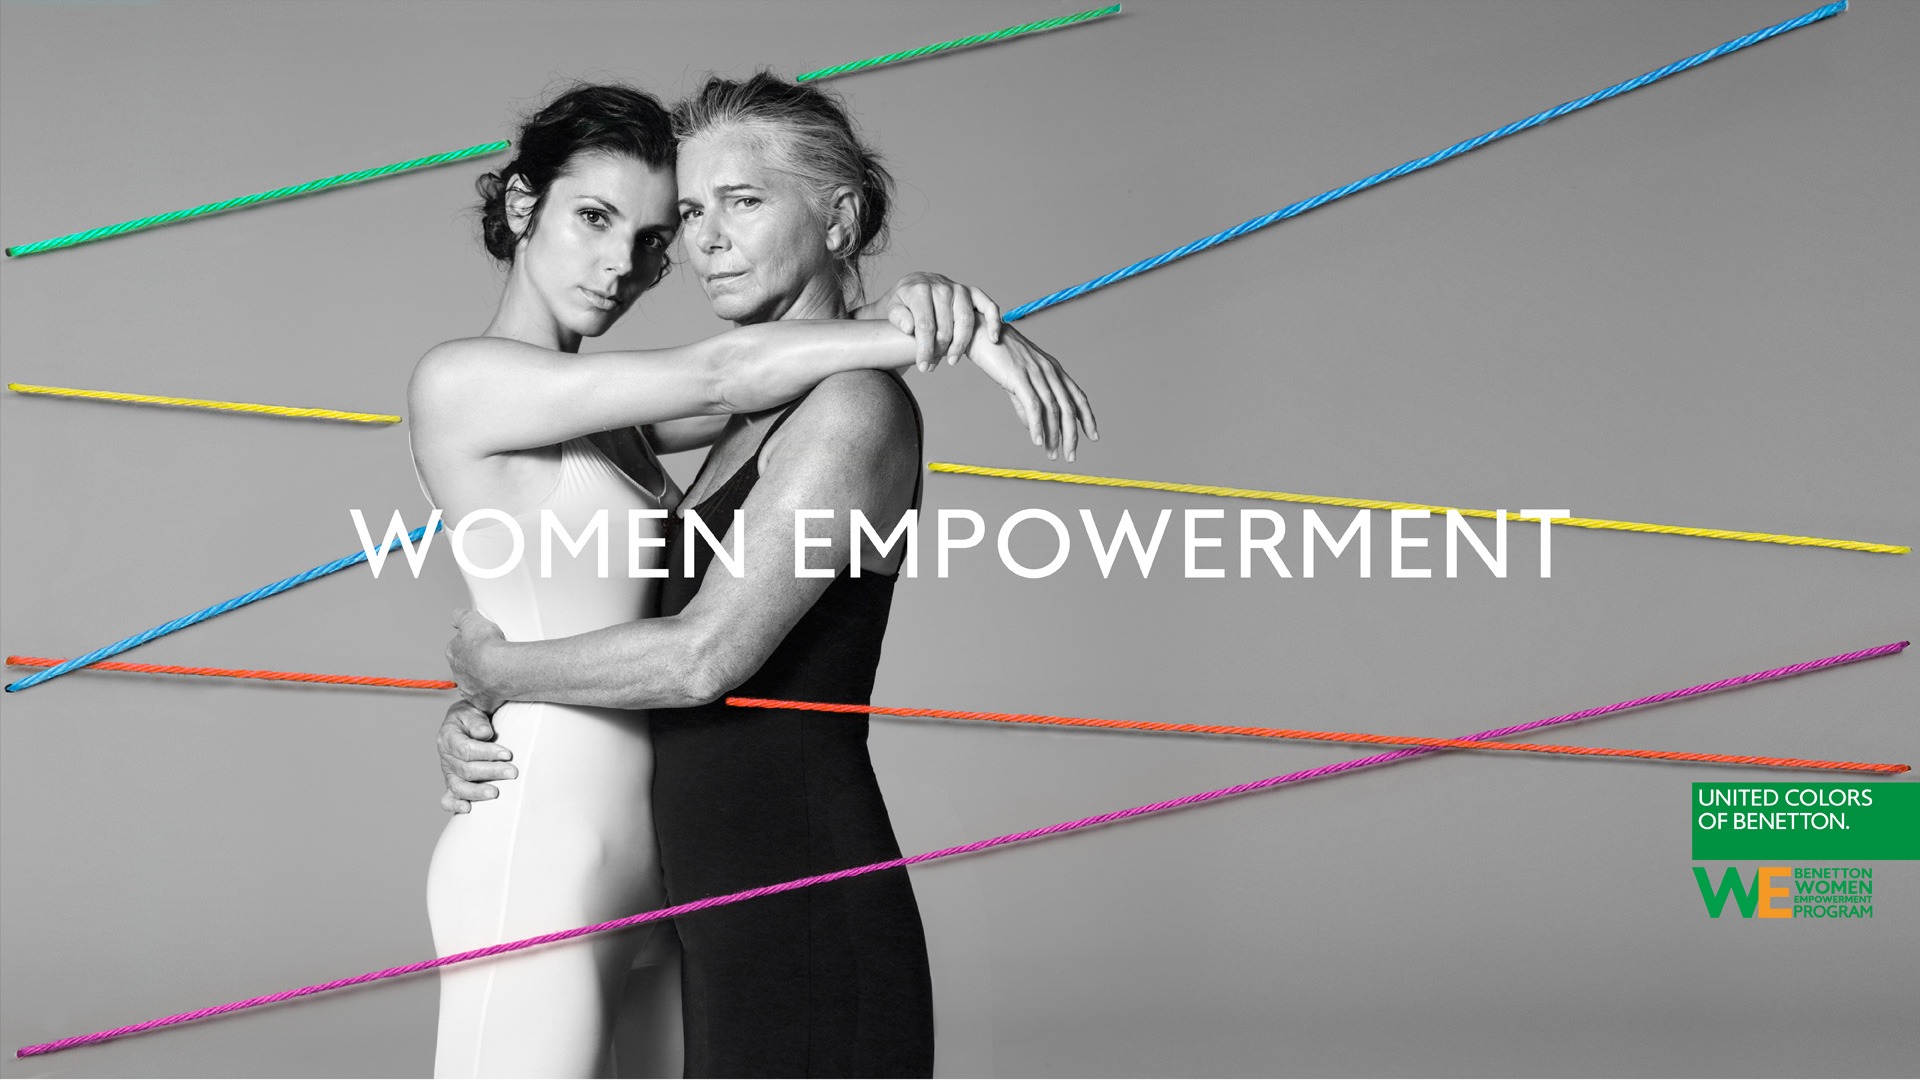 Benetton Women Empowerment Program